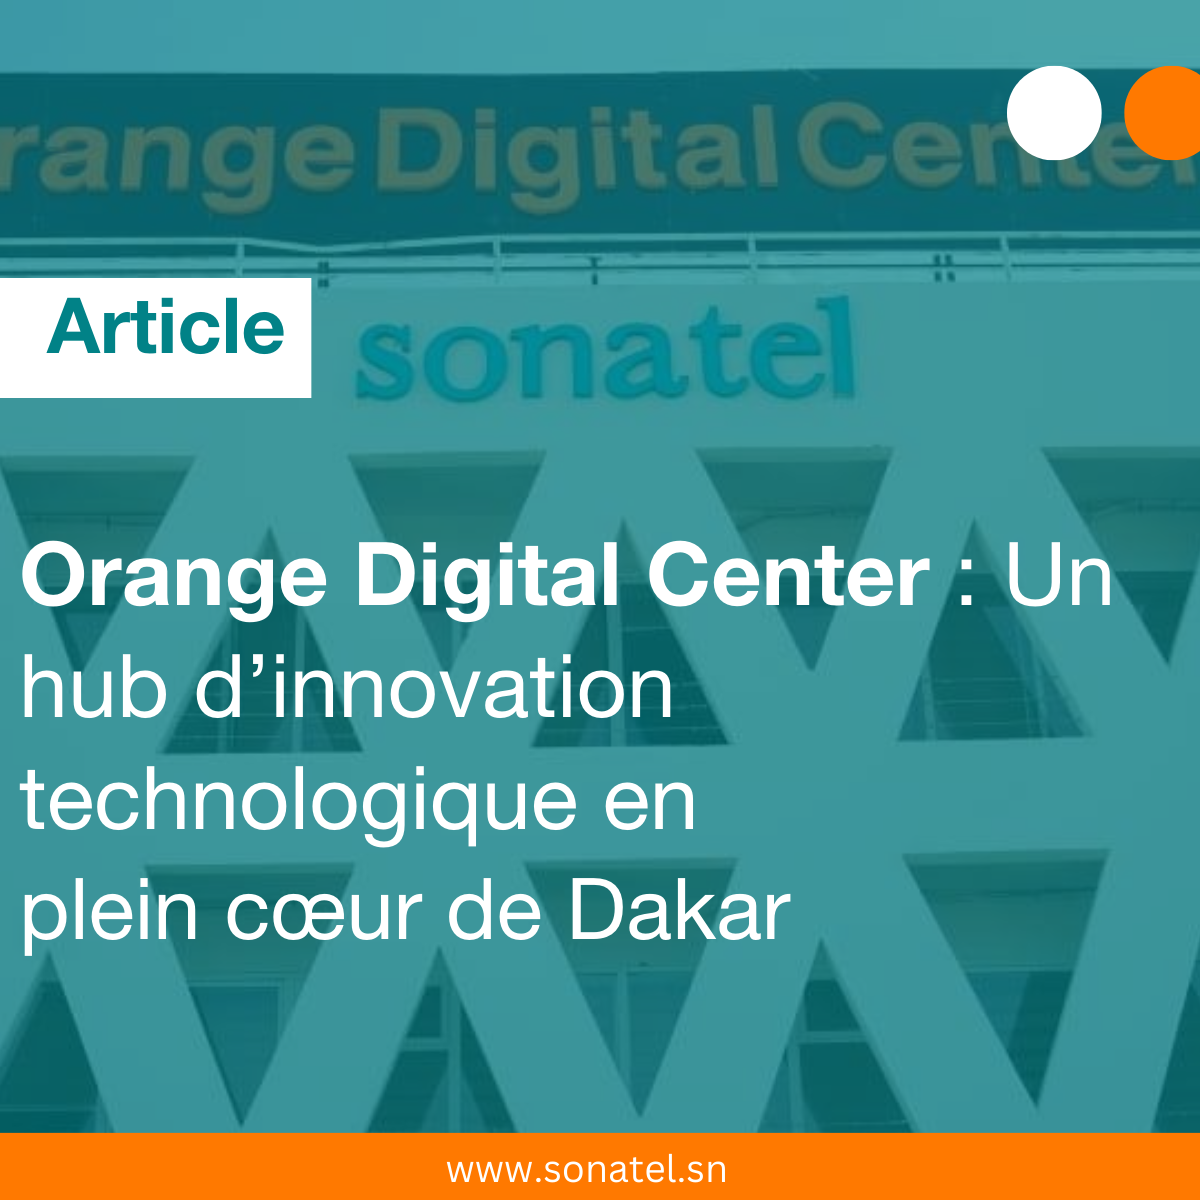 Orange Digital Center Dakar